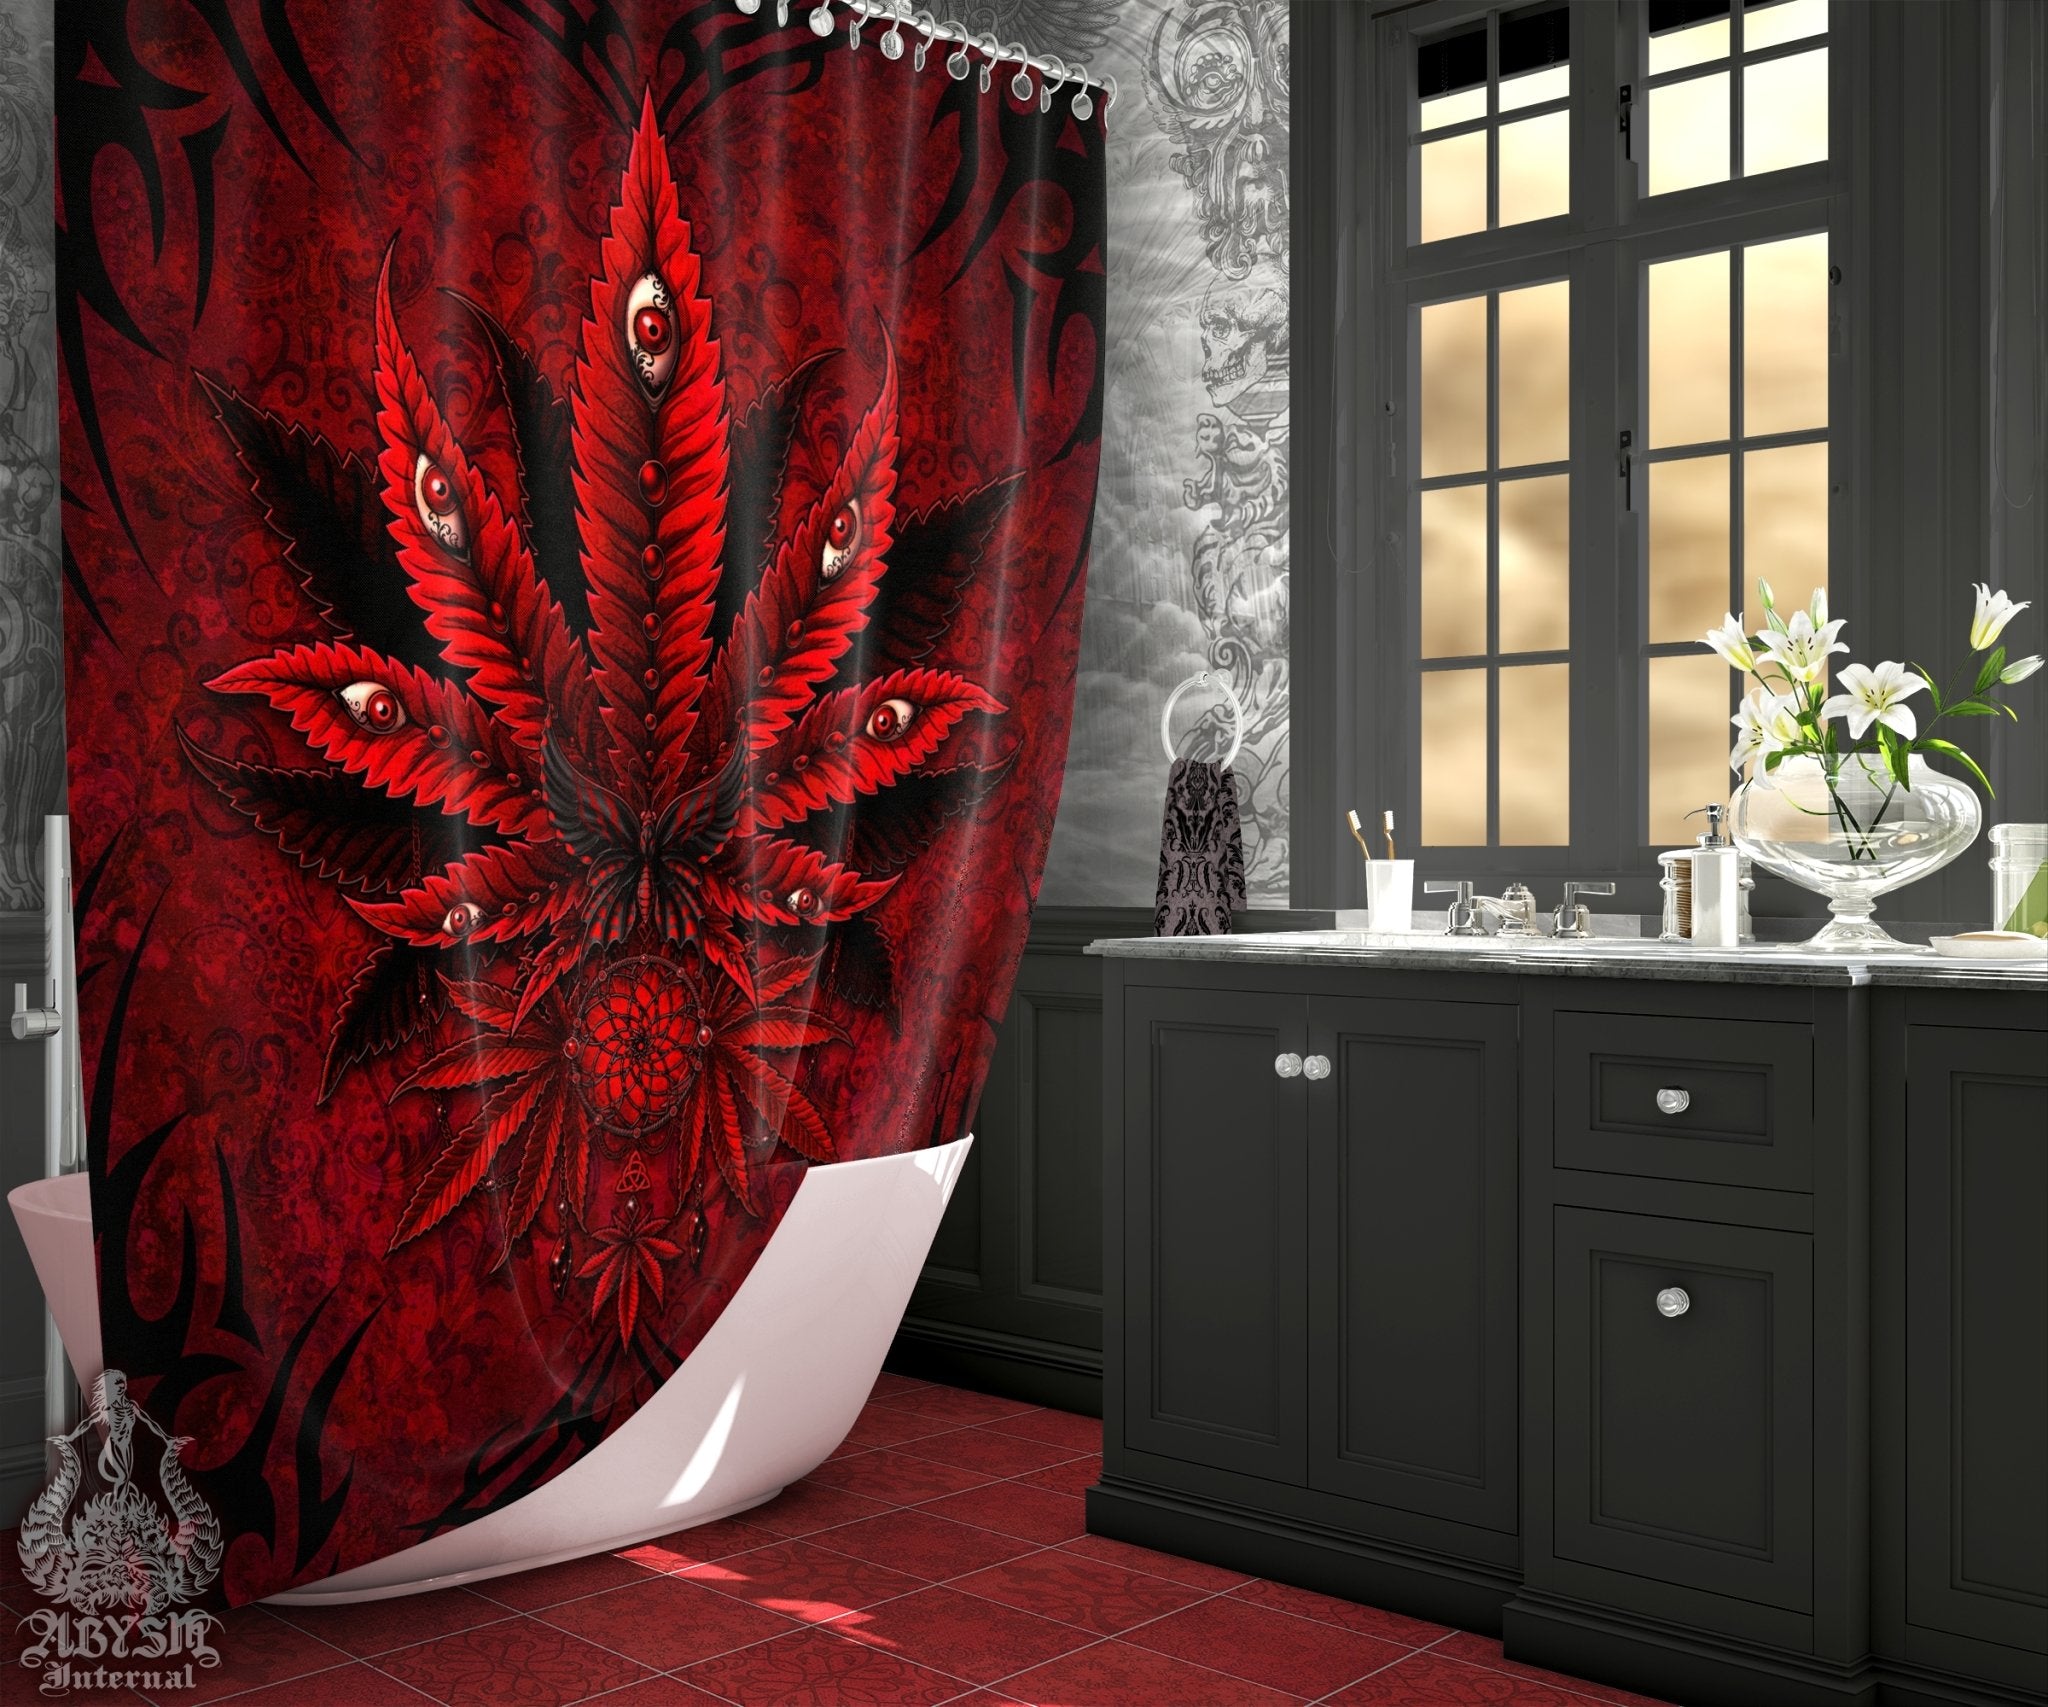 Weed Shower Curtain, Gothic Bathroom Decor, Cannabis Print, Alternative 420 Home Art - Marijuana, Bloody Goth - Abysm Internal